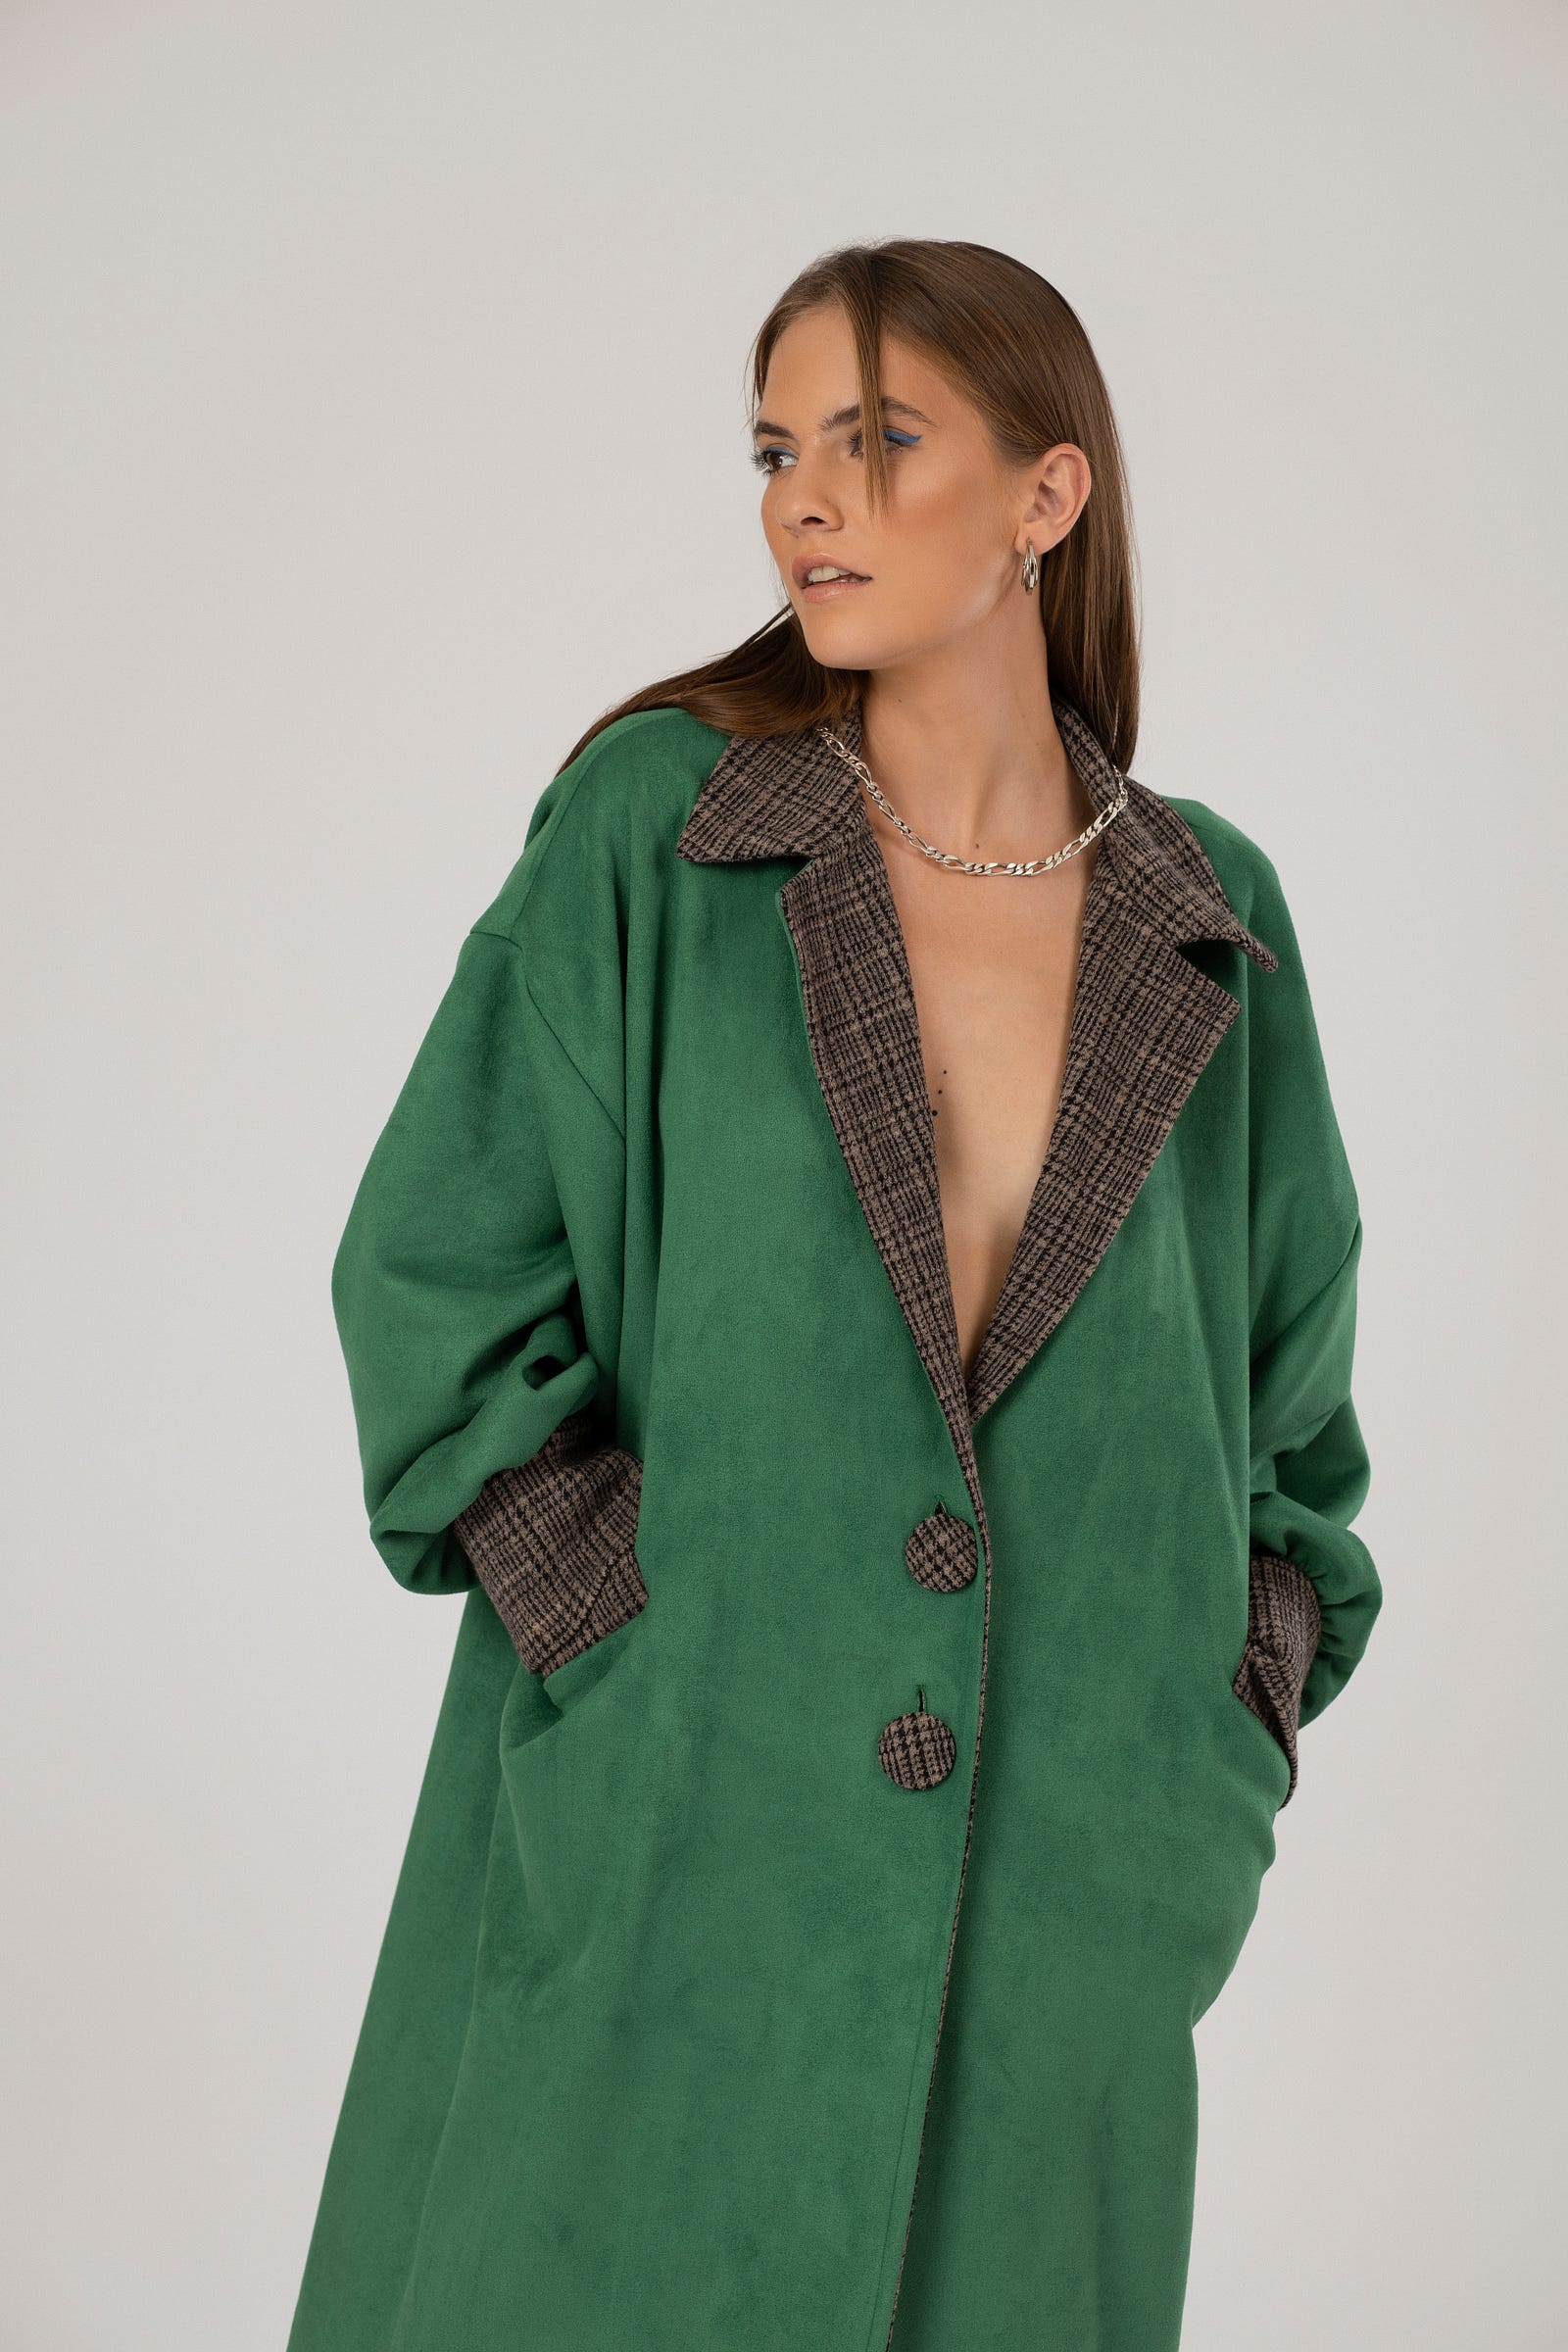 Emerald suede green trench coat